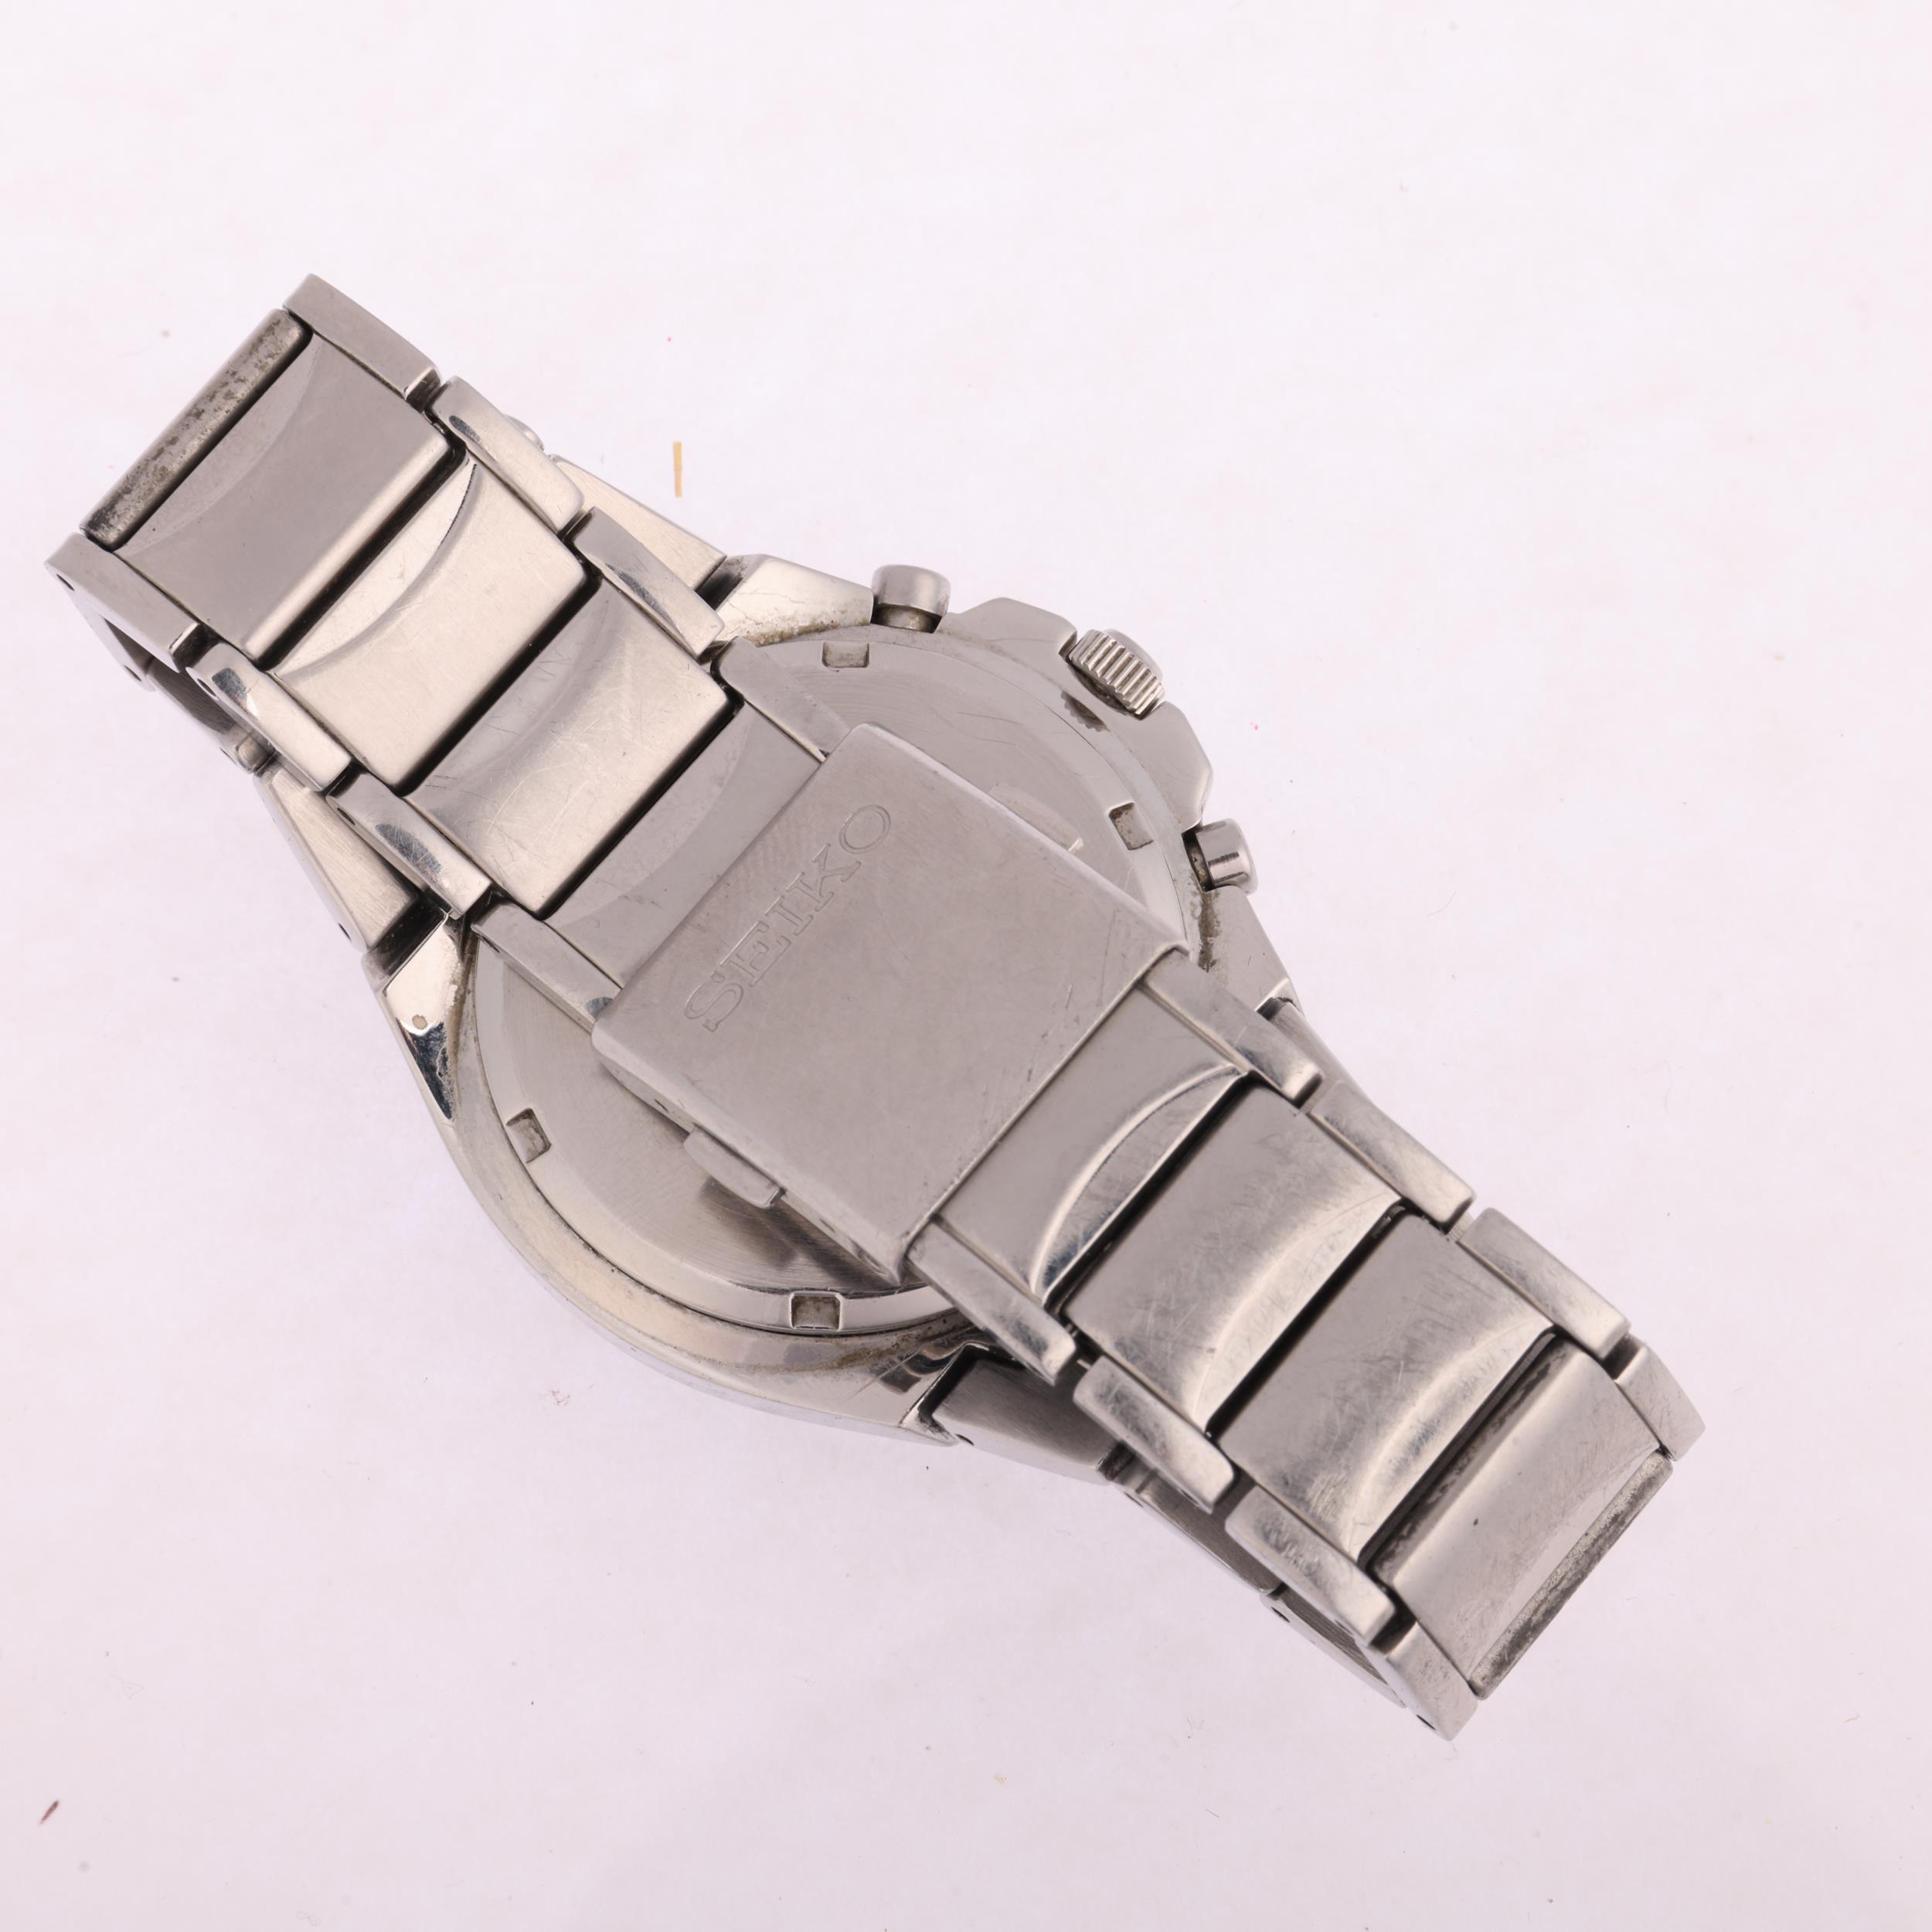 SEIKO - a stainless steel quartz chronograph calendar bracelet watch, ref. 7T92-0HX0, circa 2010, - Image 3 of 5